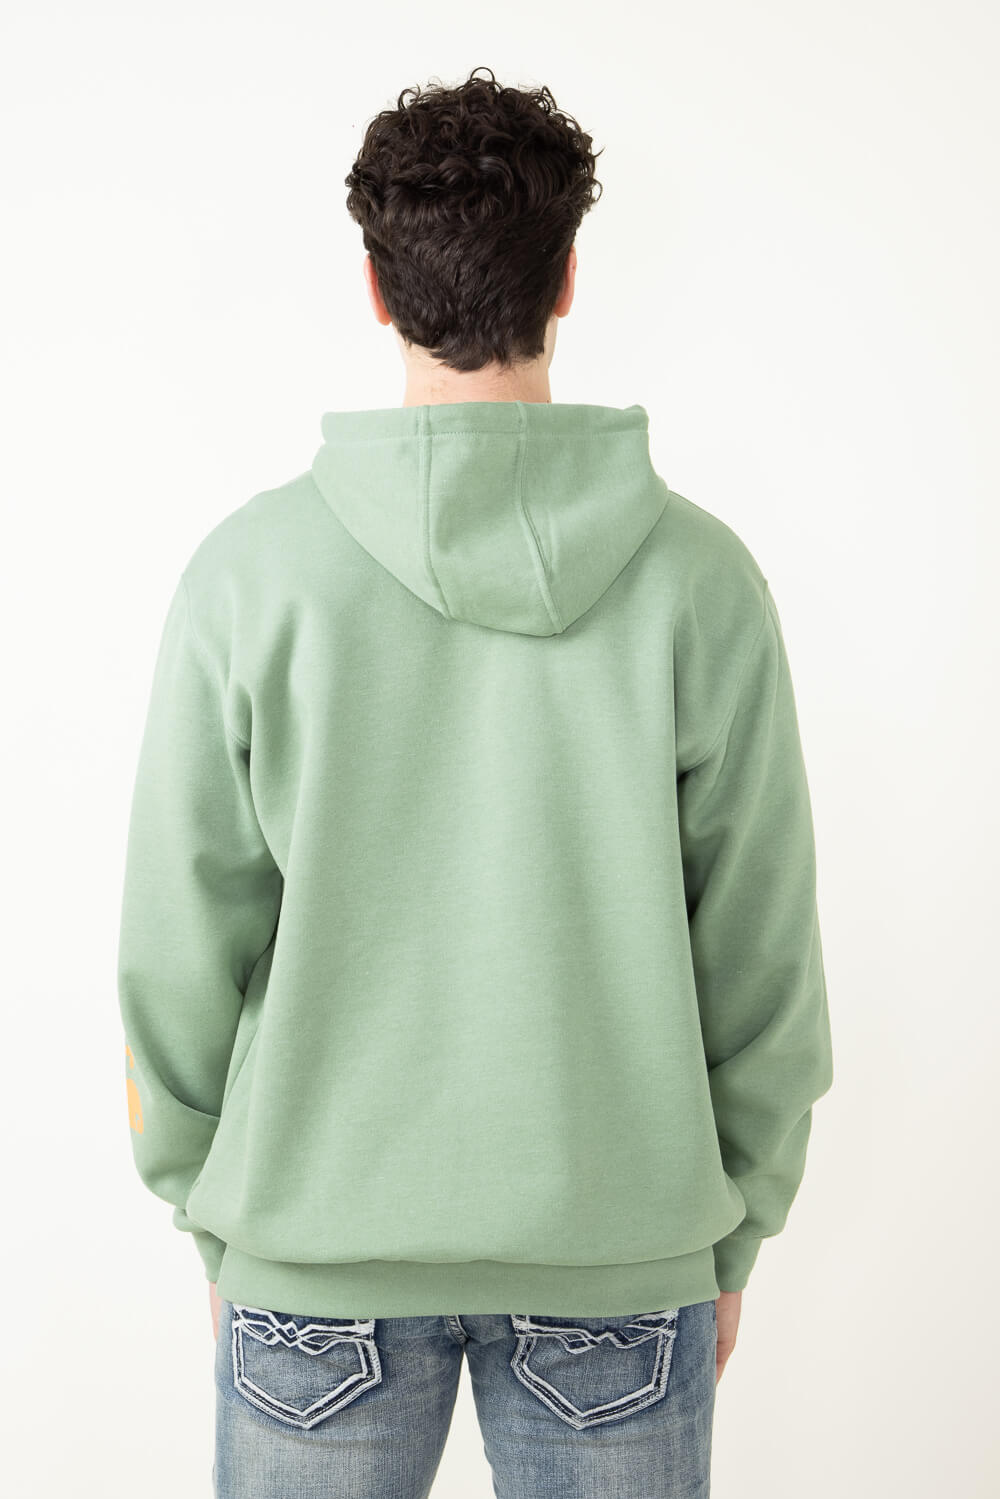 Carhartt Logo Sleeve Graphic Hoodie for Men in Green